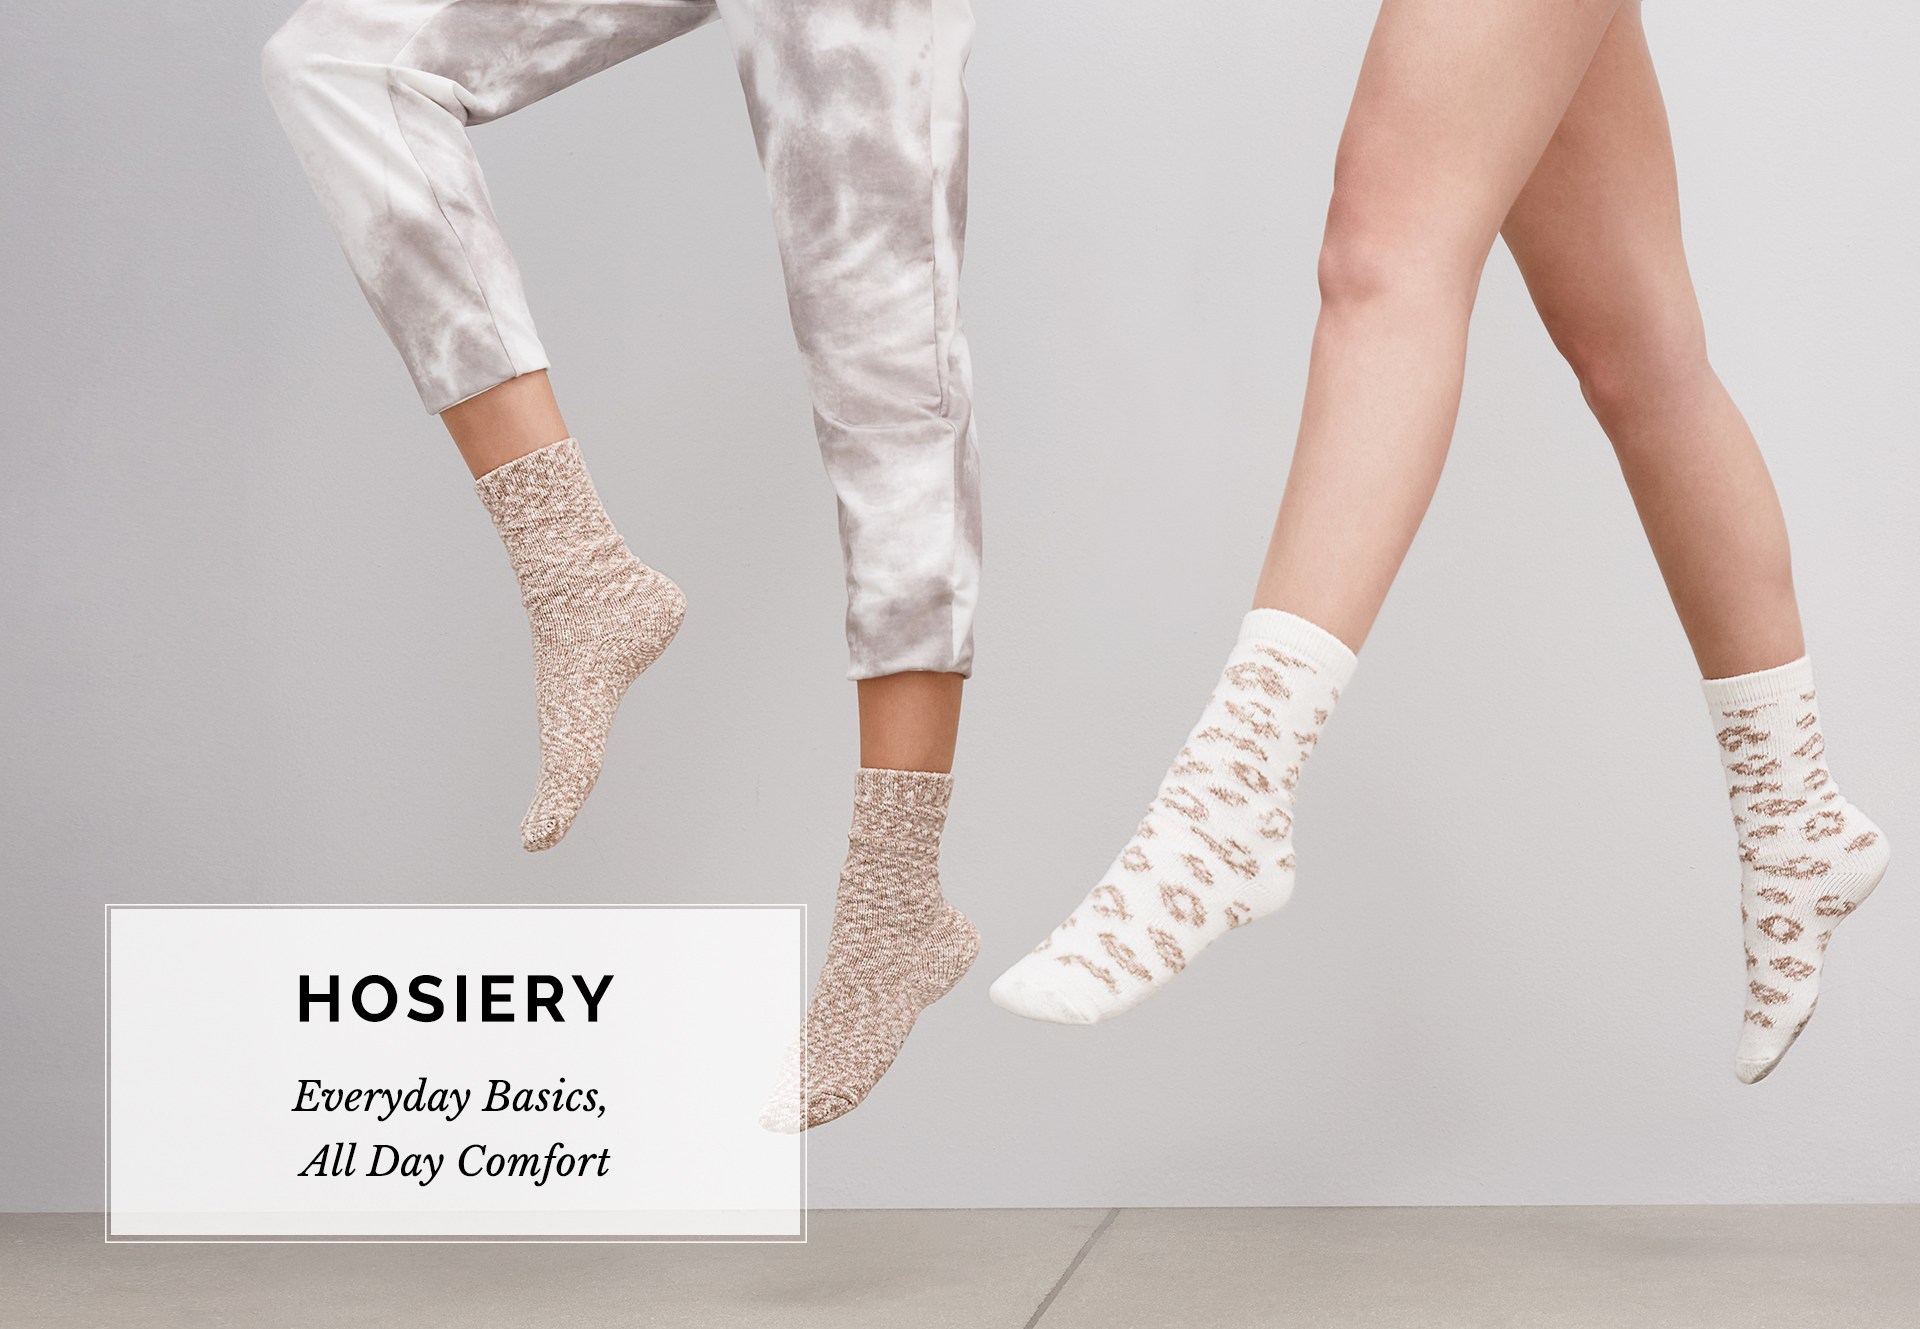 Hosiery - Everyday Basics, All Day Comfort